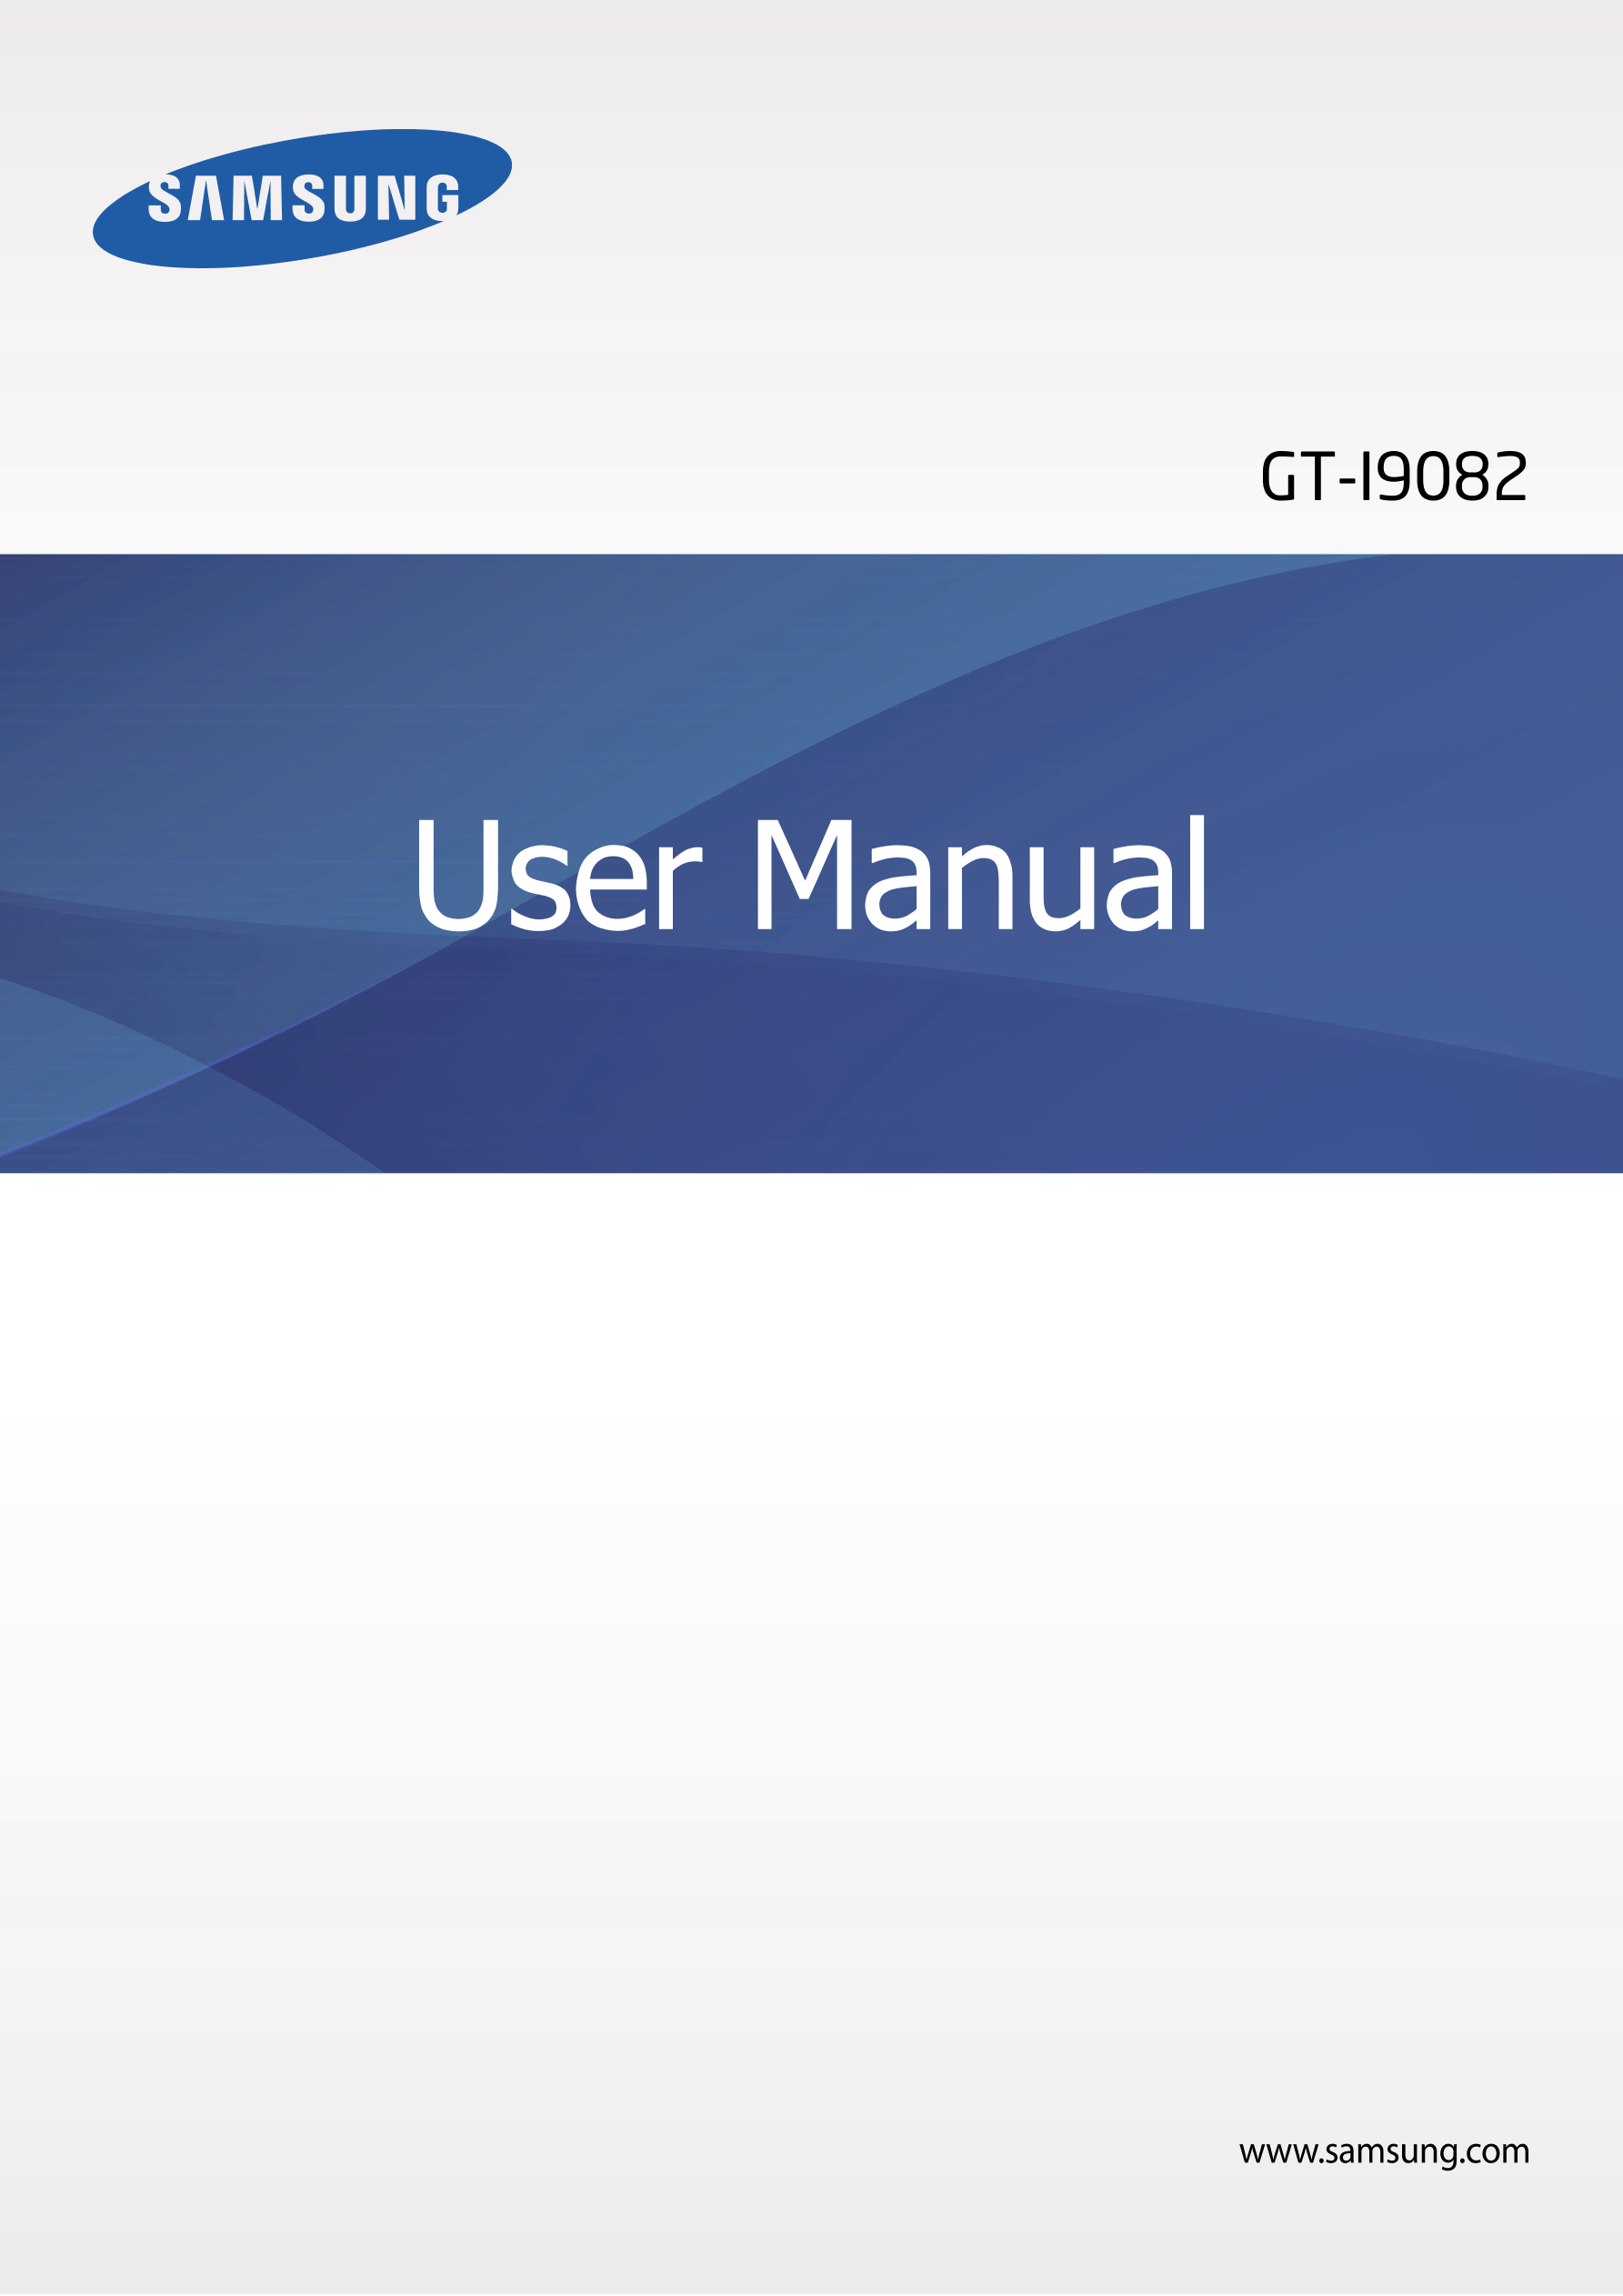 GT-I9082
User Manual
www.samsung.com